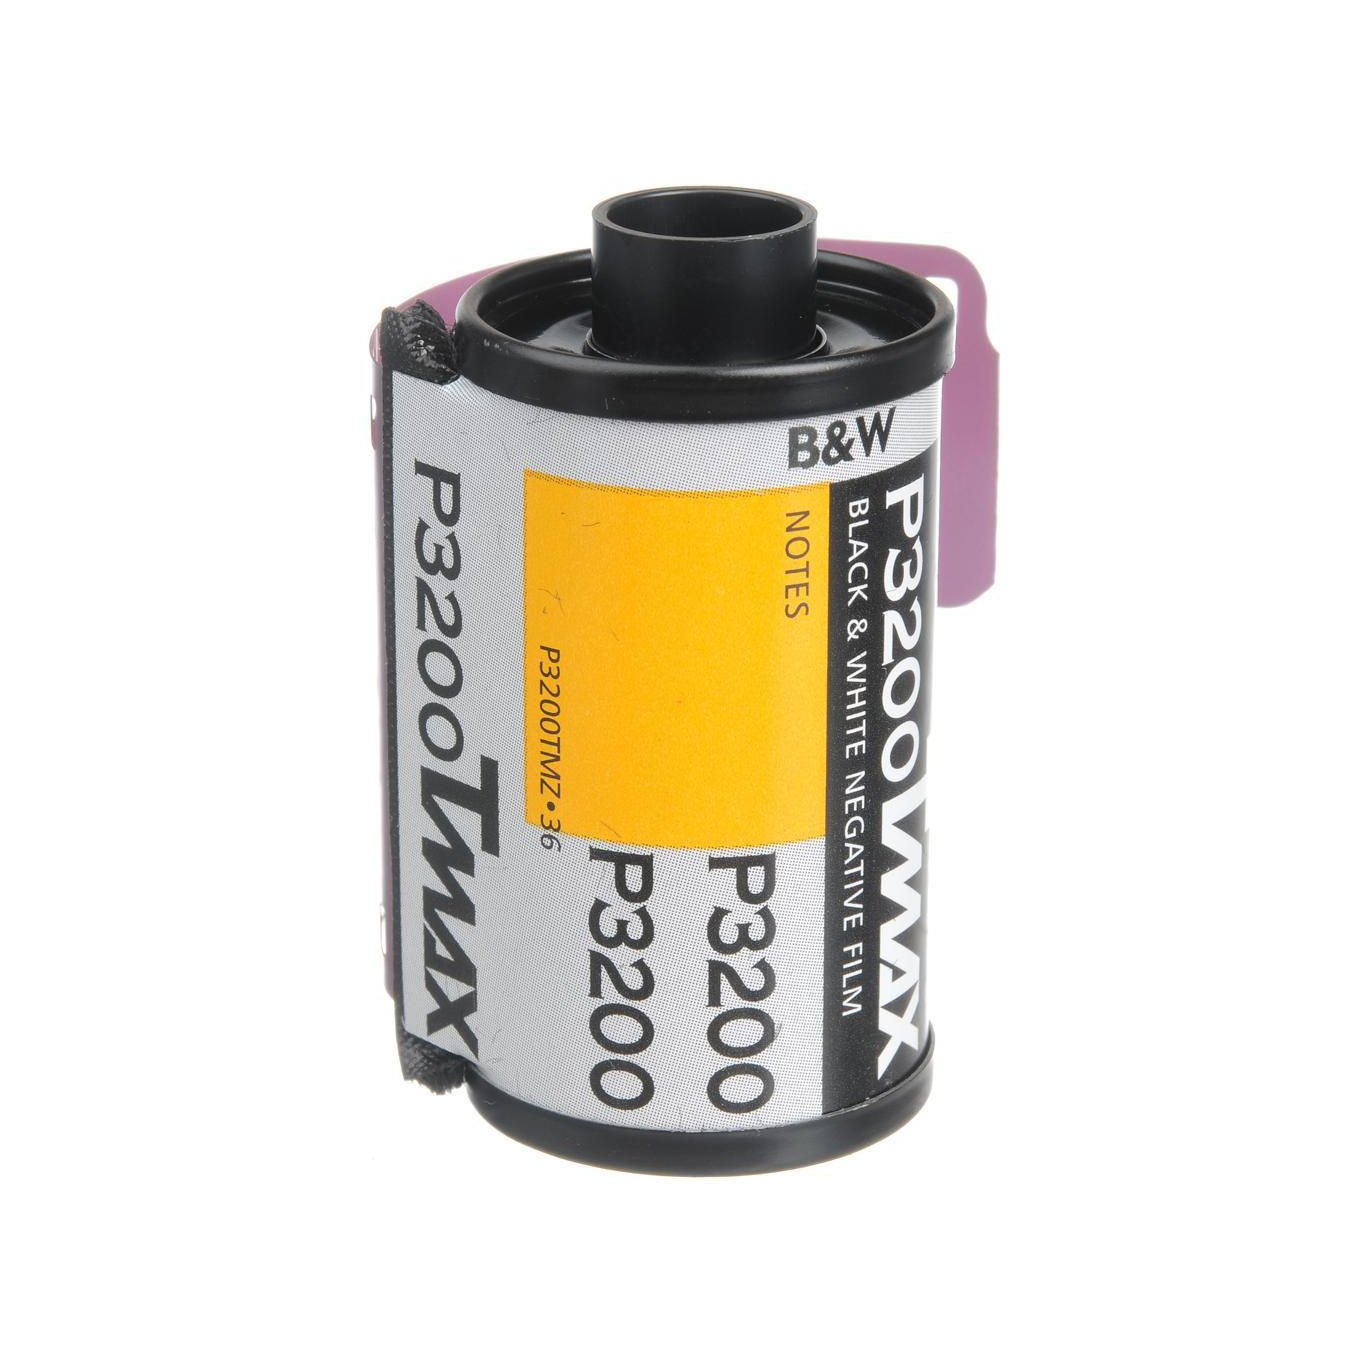 Kodak Professional T-Max P3200 Black and White Negative Film (35mm Roll